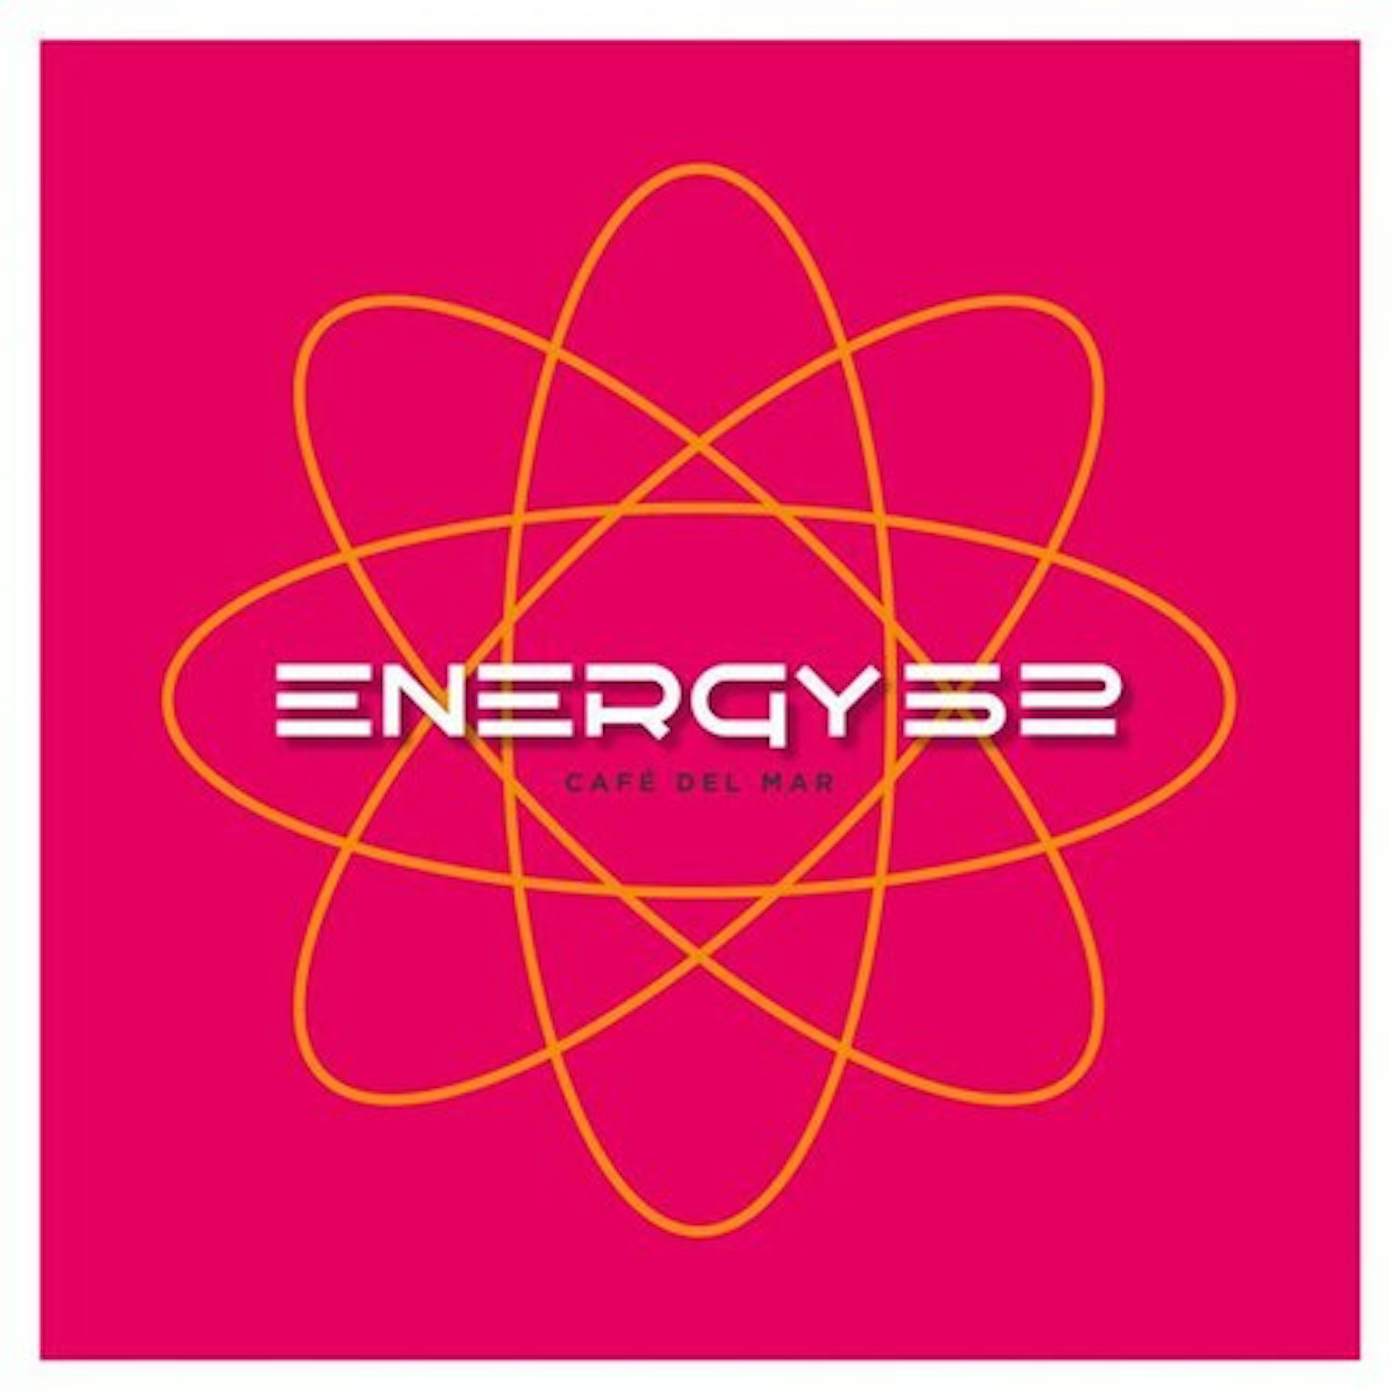 Energy 52 CAFE DEL MAR (NALIN & KANE / DEADMAU5 REMIXES) Vinyl Record